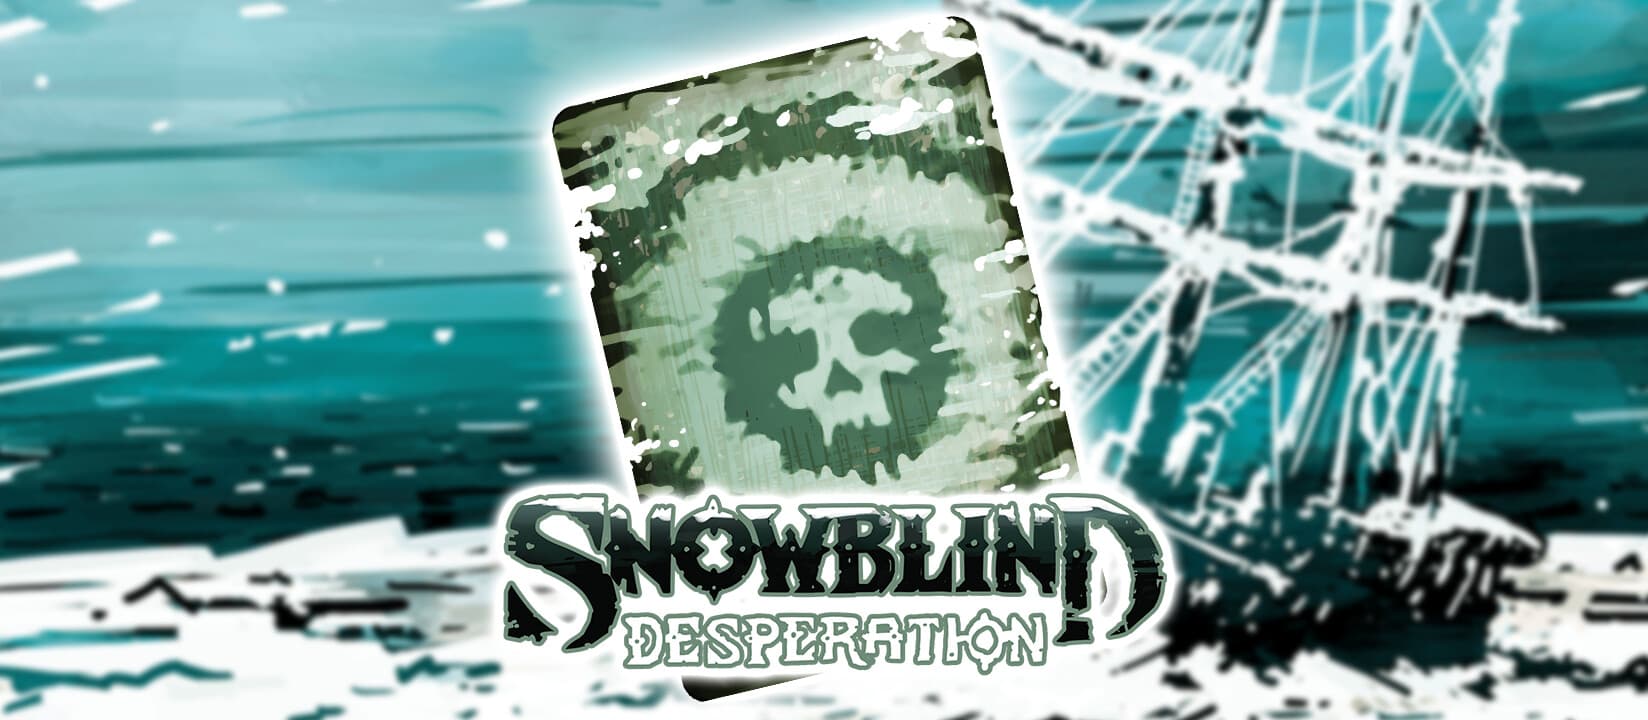 Snowblind - Desperation : ça se rafraîchit drôlement